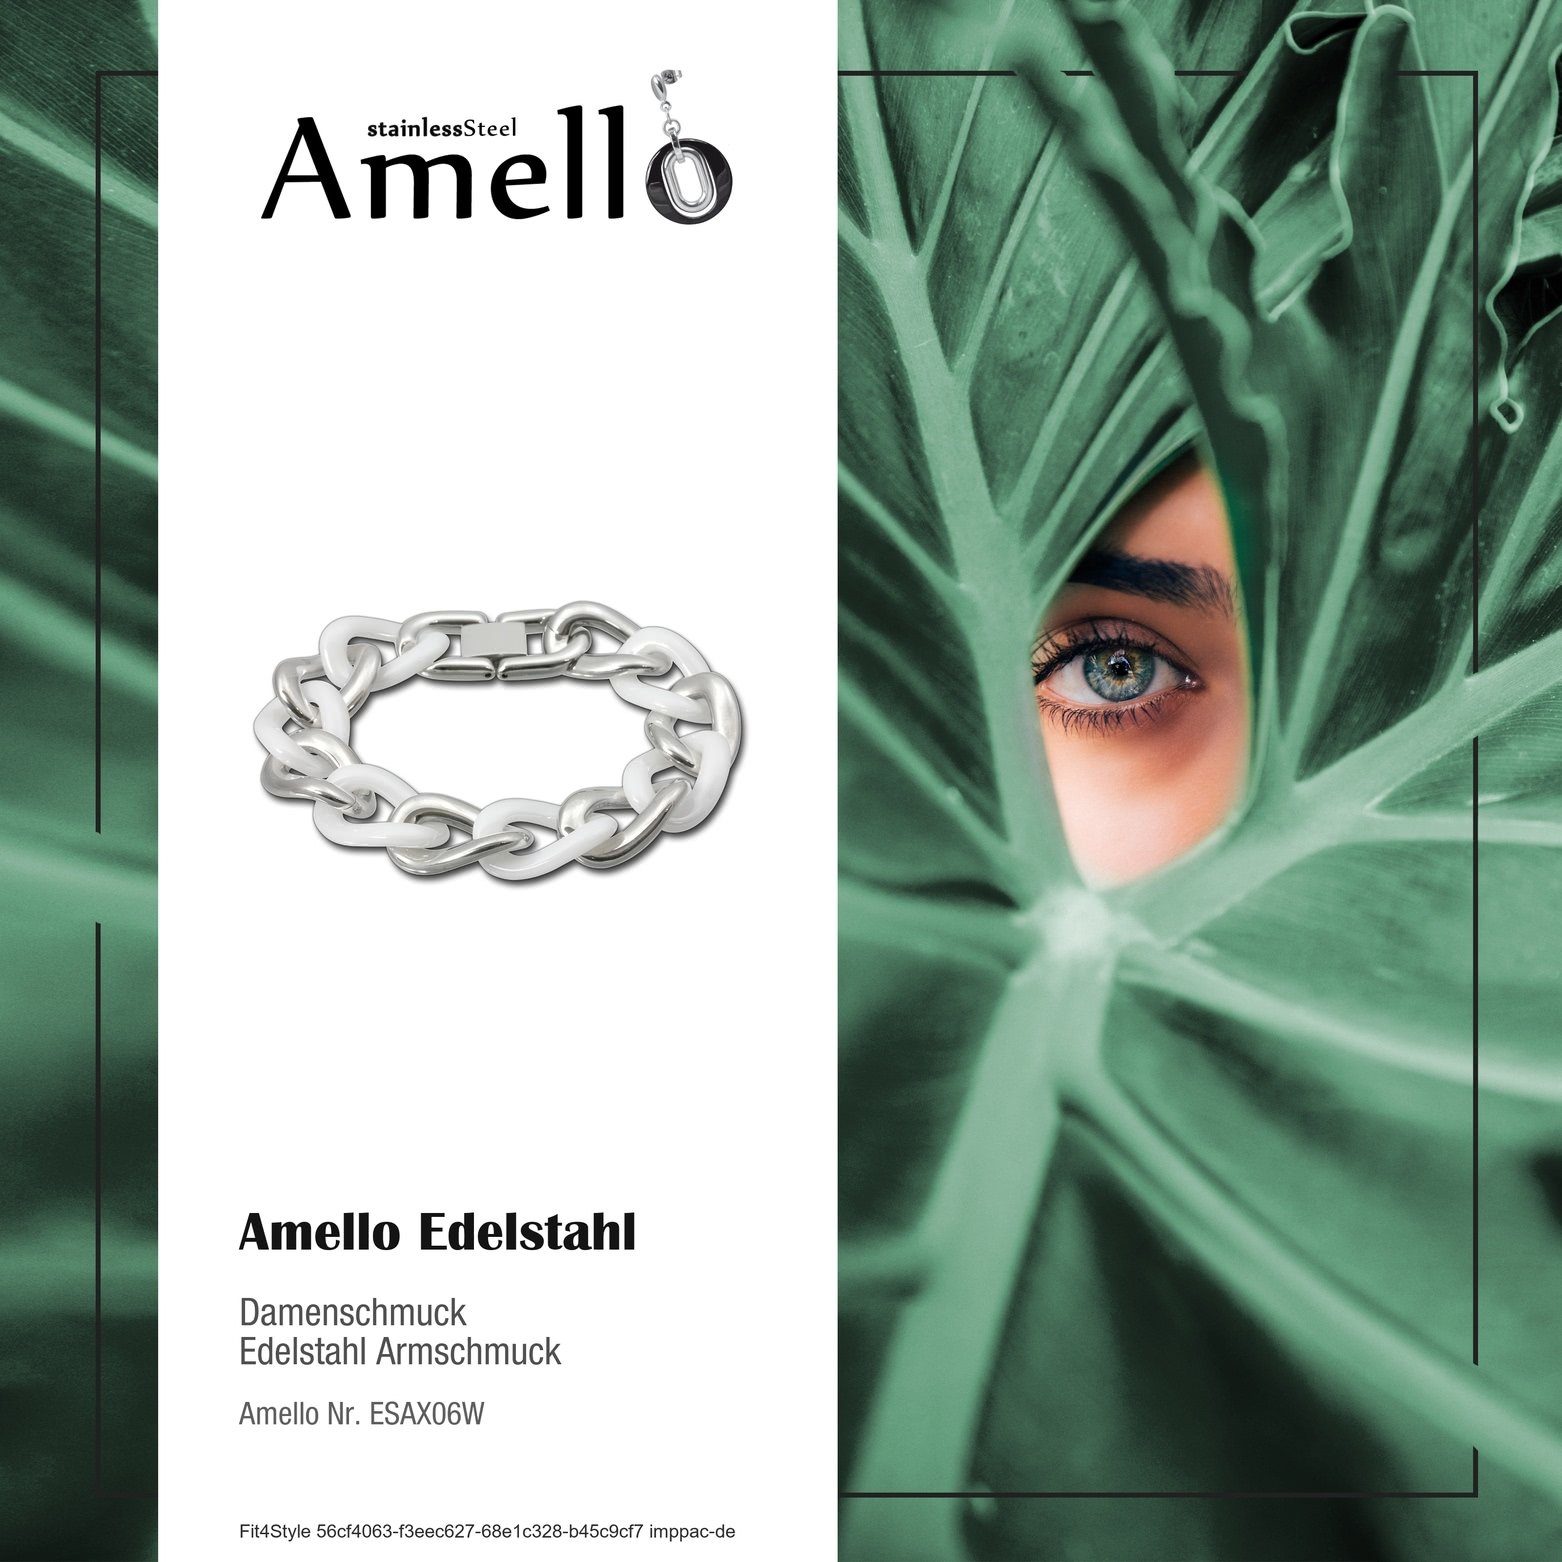 weiß Steel) Amello silber Edelstahl Amello (Armband), Armbänder Damen Panzer Armband Edelstahlarmband für Big (Stainless